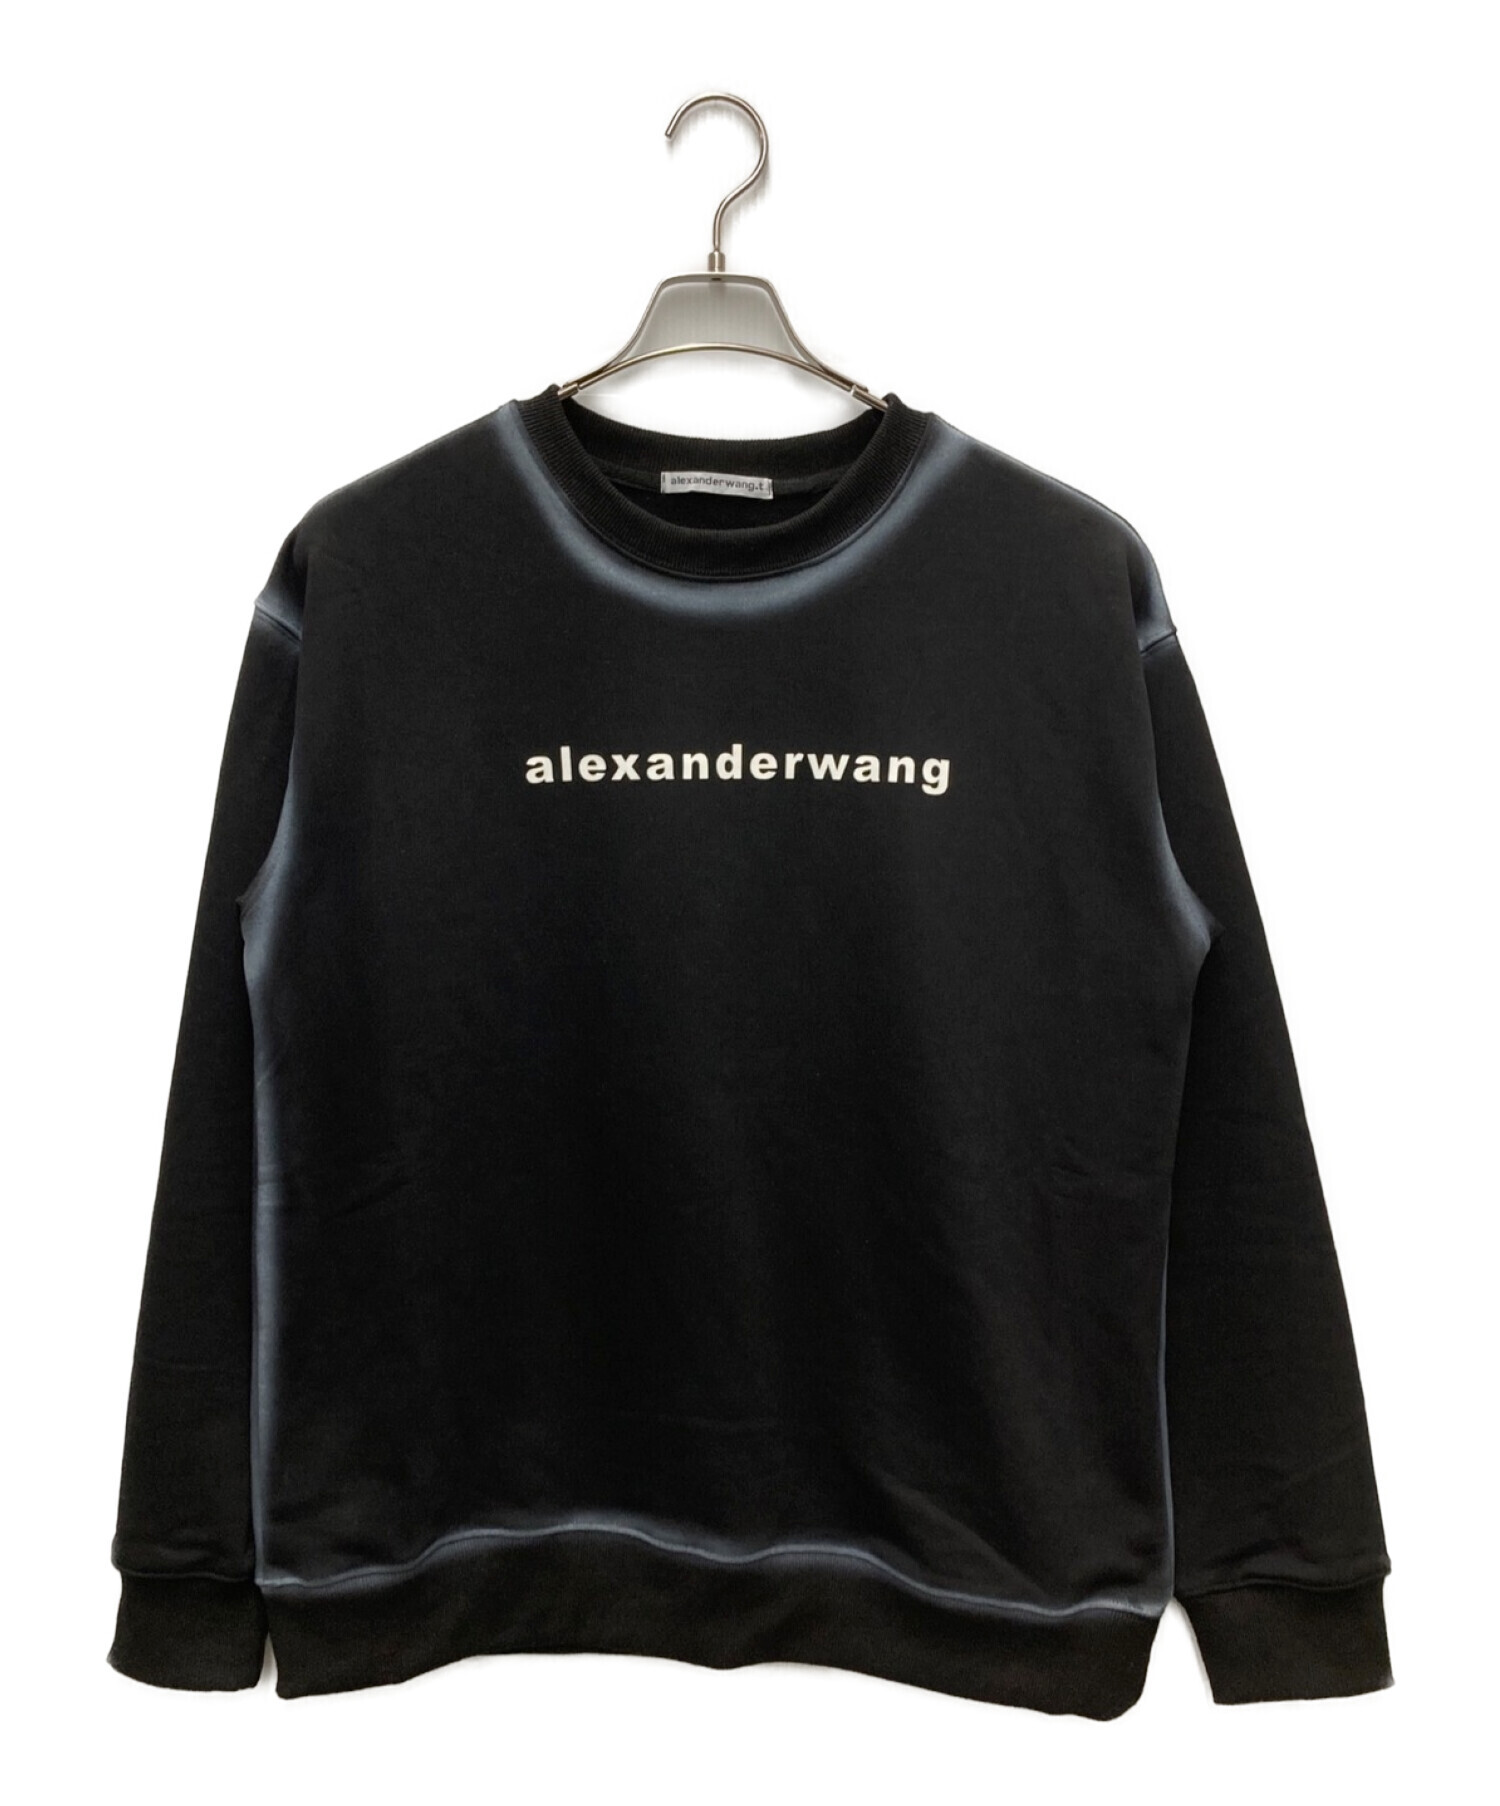 ALEXANDER WANG.T (アレキサンダーワング) ロゴスウェット ブラック サイズ:S